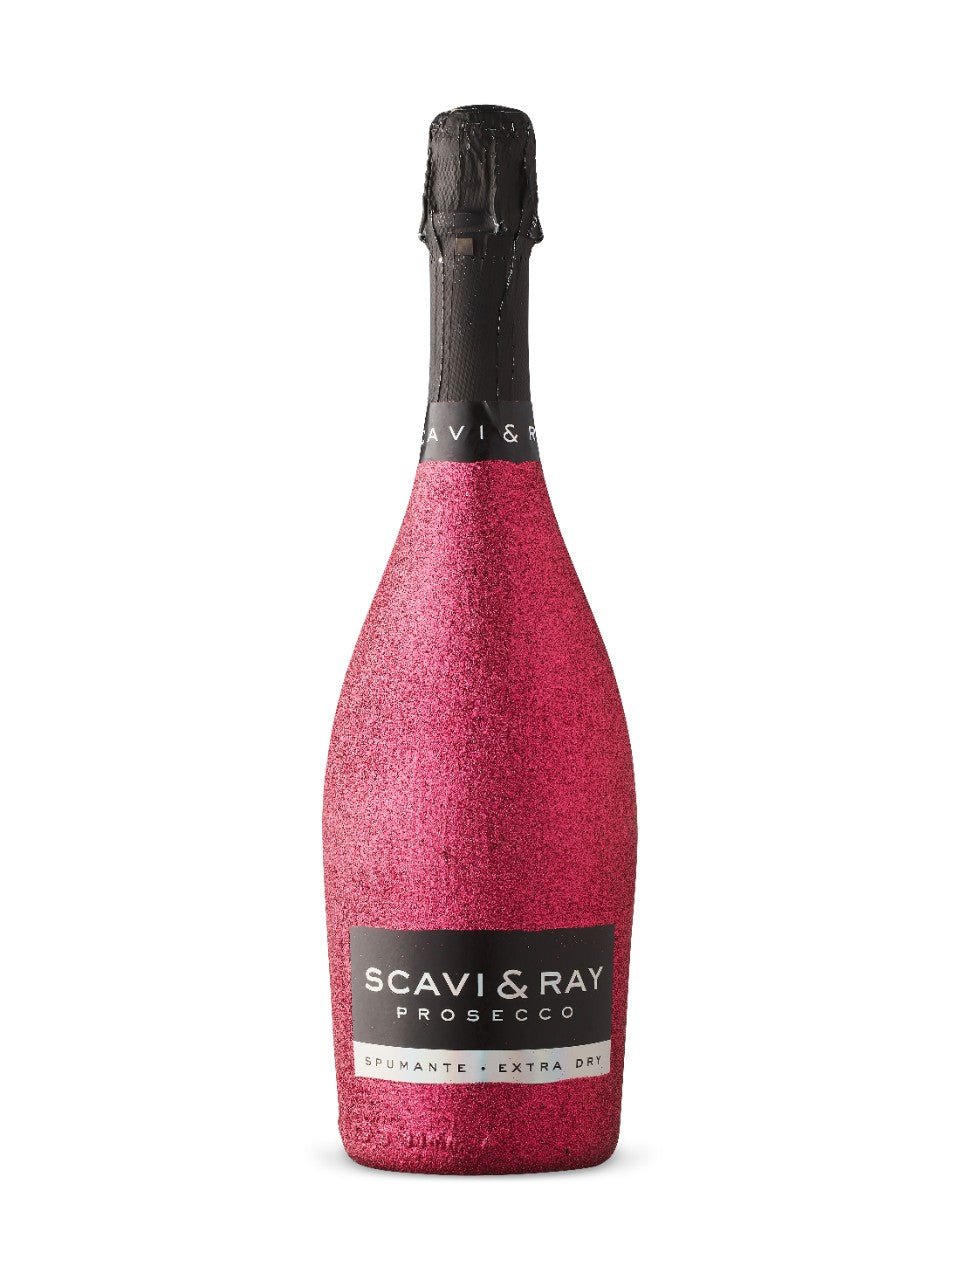 Scavi & Ray Prosecco Spumante DOCG | Exquisite Wine & Alcohol Gift Delivery Toronto Canada | Vyno